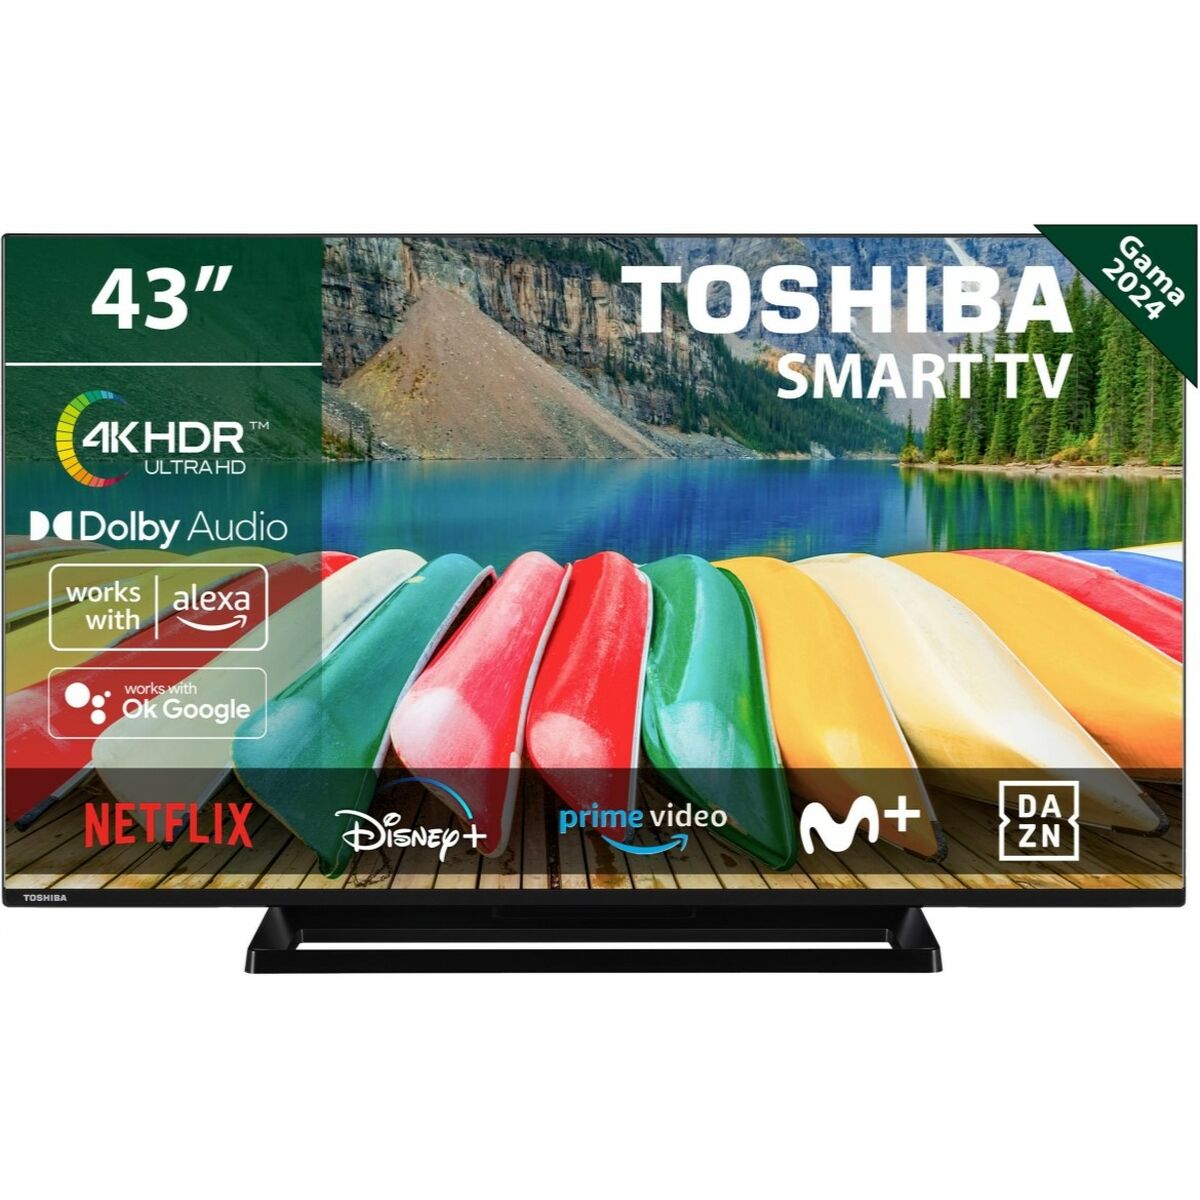 Smart TV Toshiba 43UV3363DG 4K Ultra HD 43